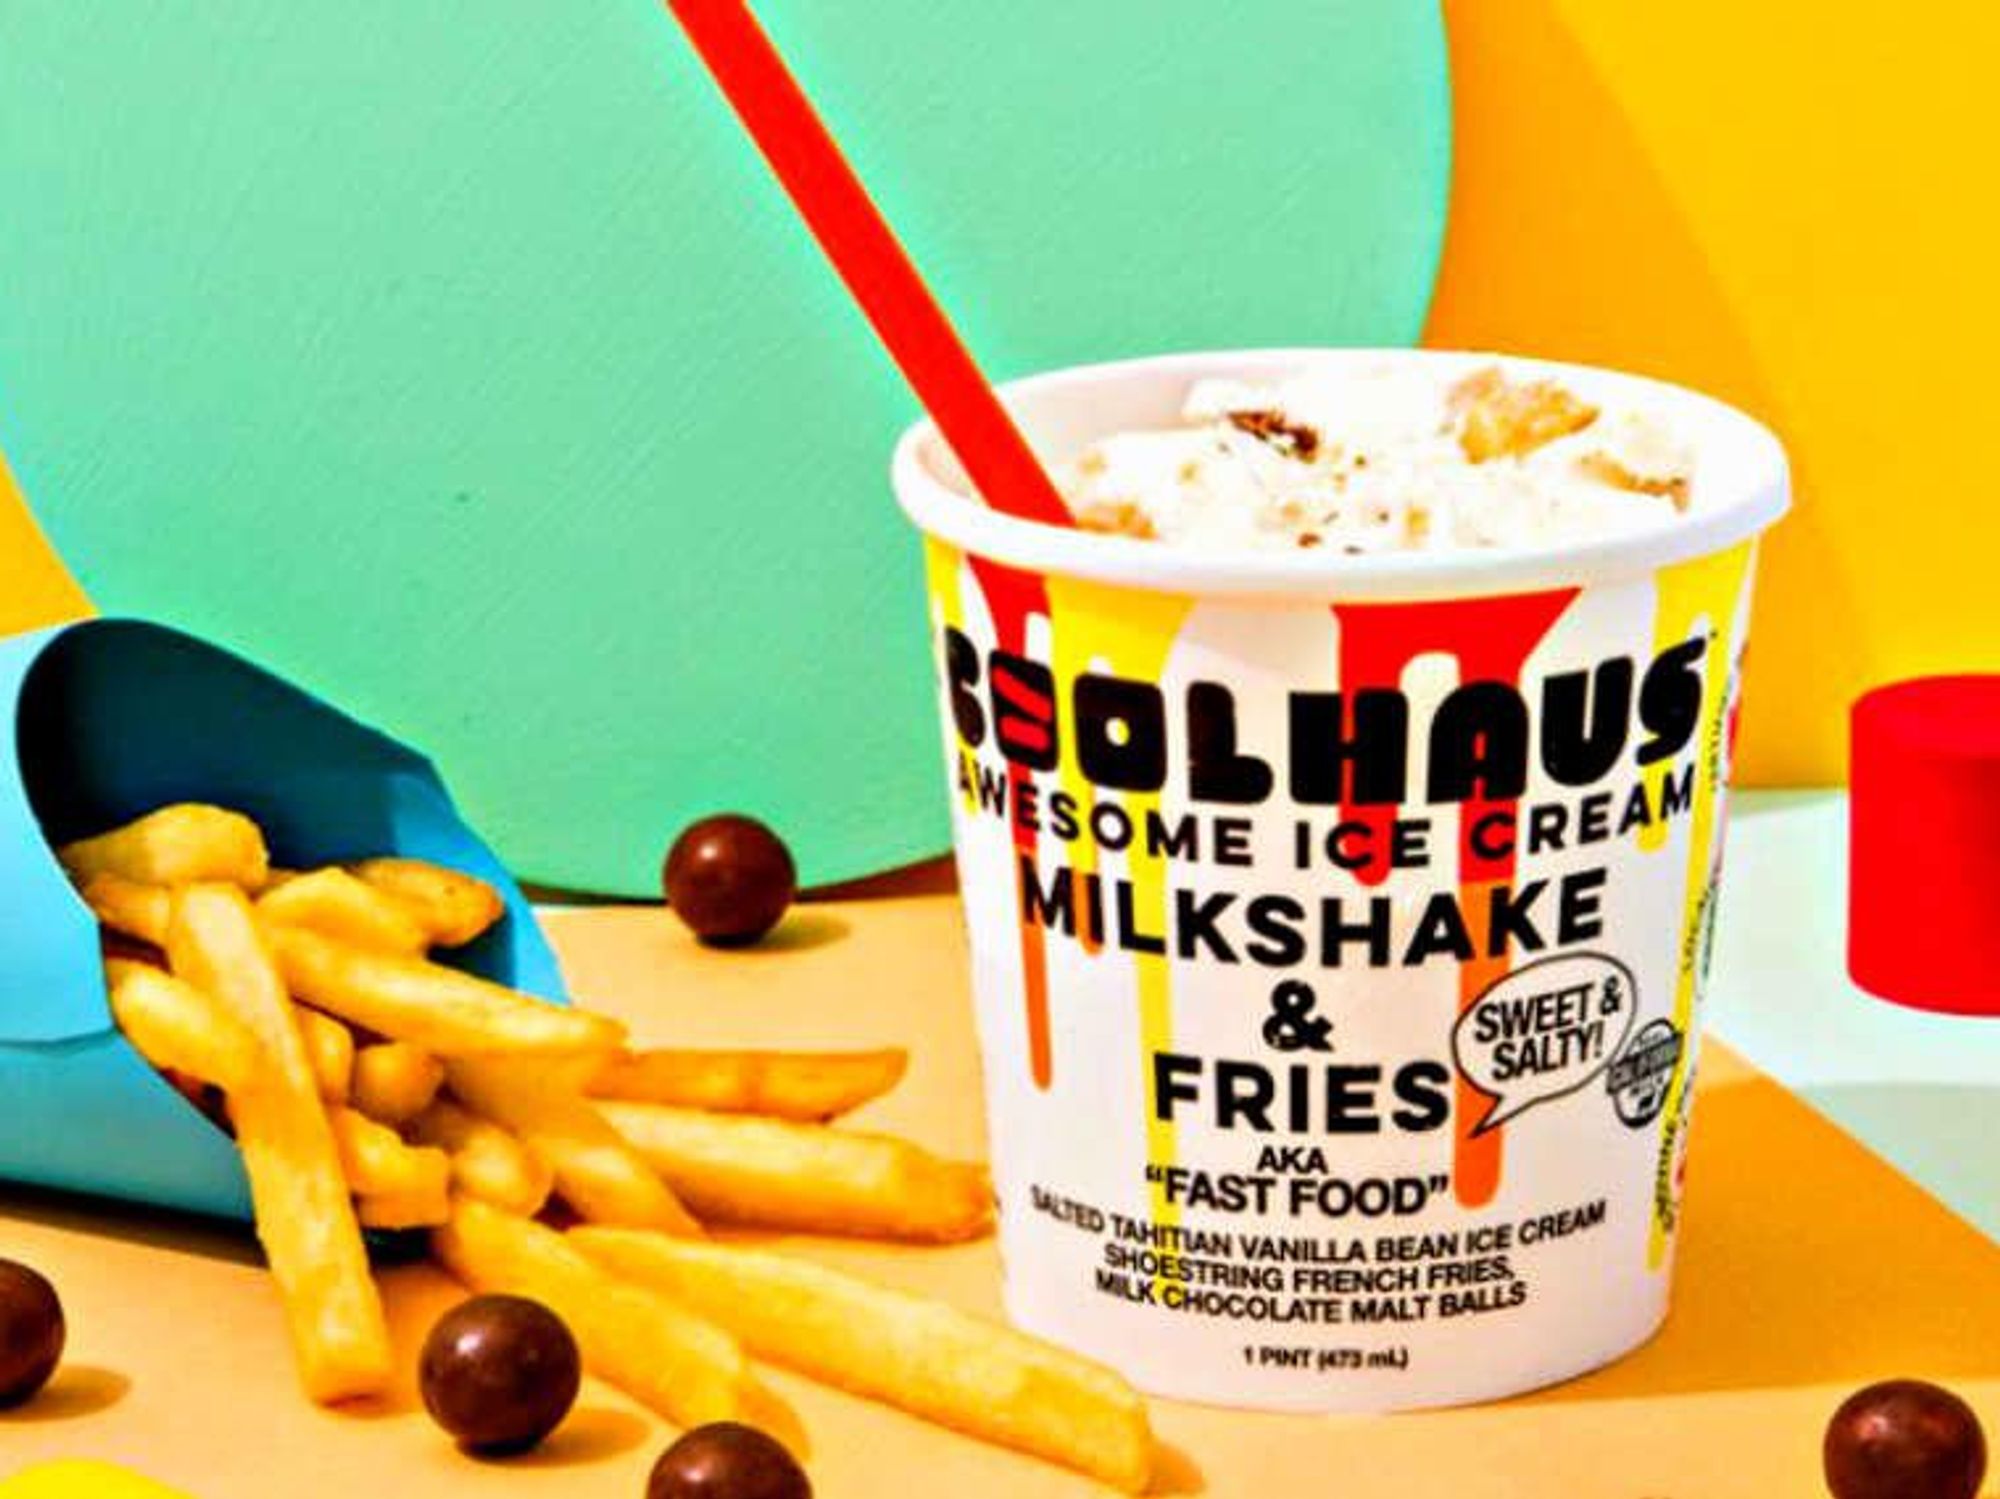 Drive-Thru Gourmet - Coolhaus ice cream milkshake & fries